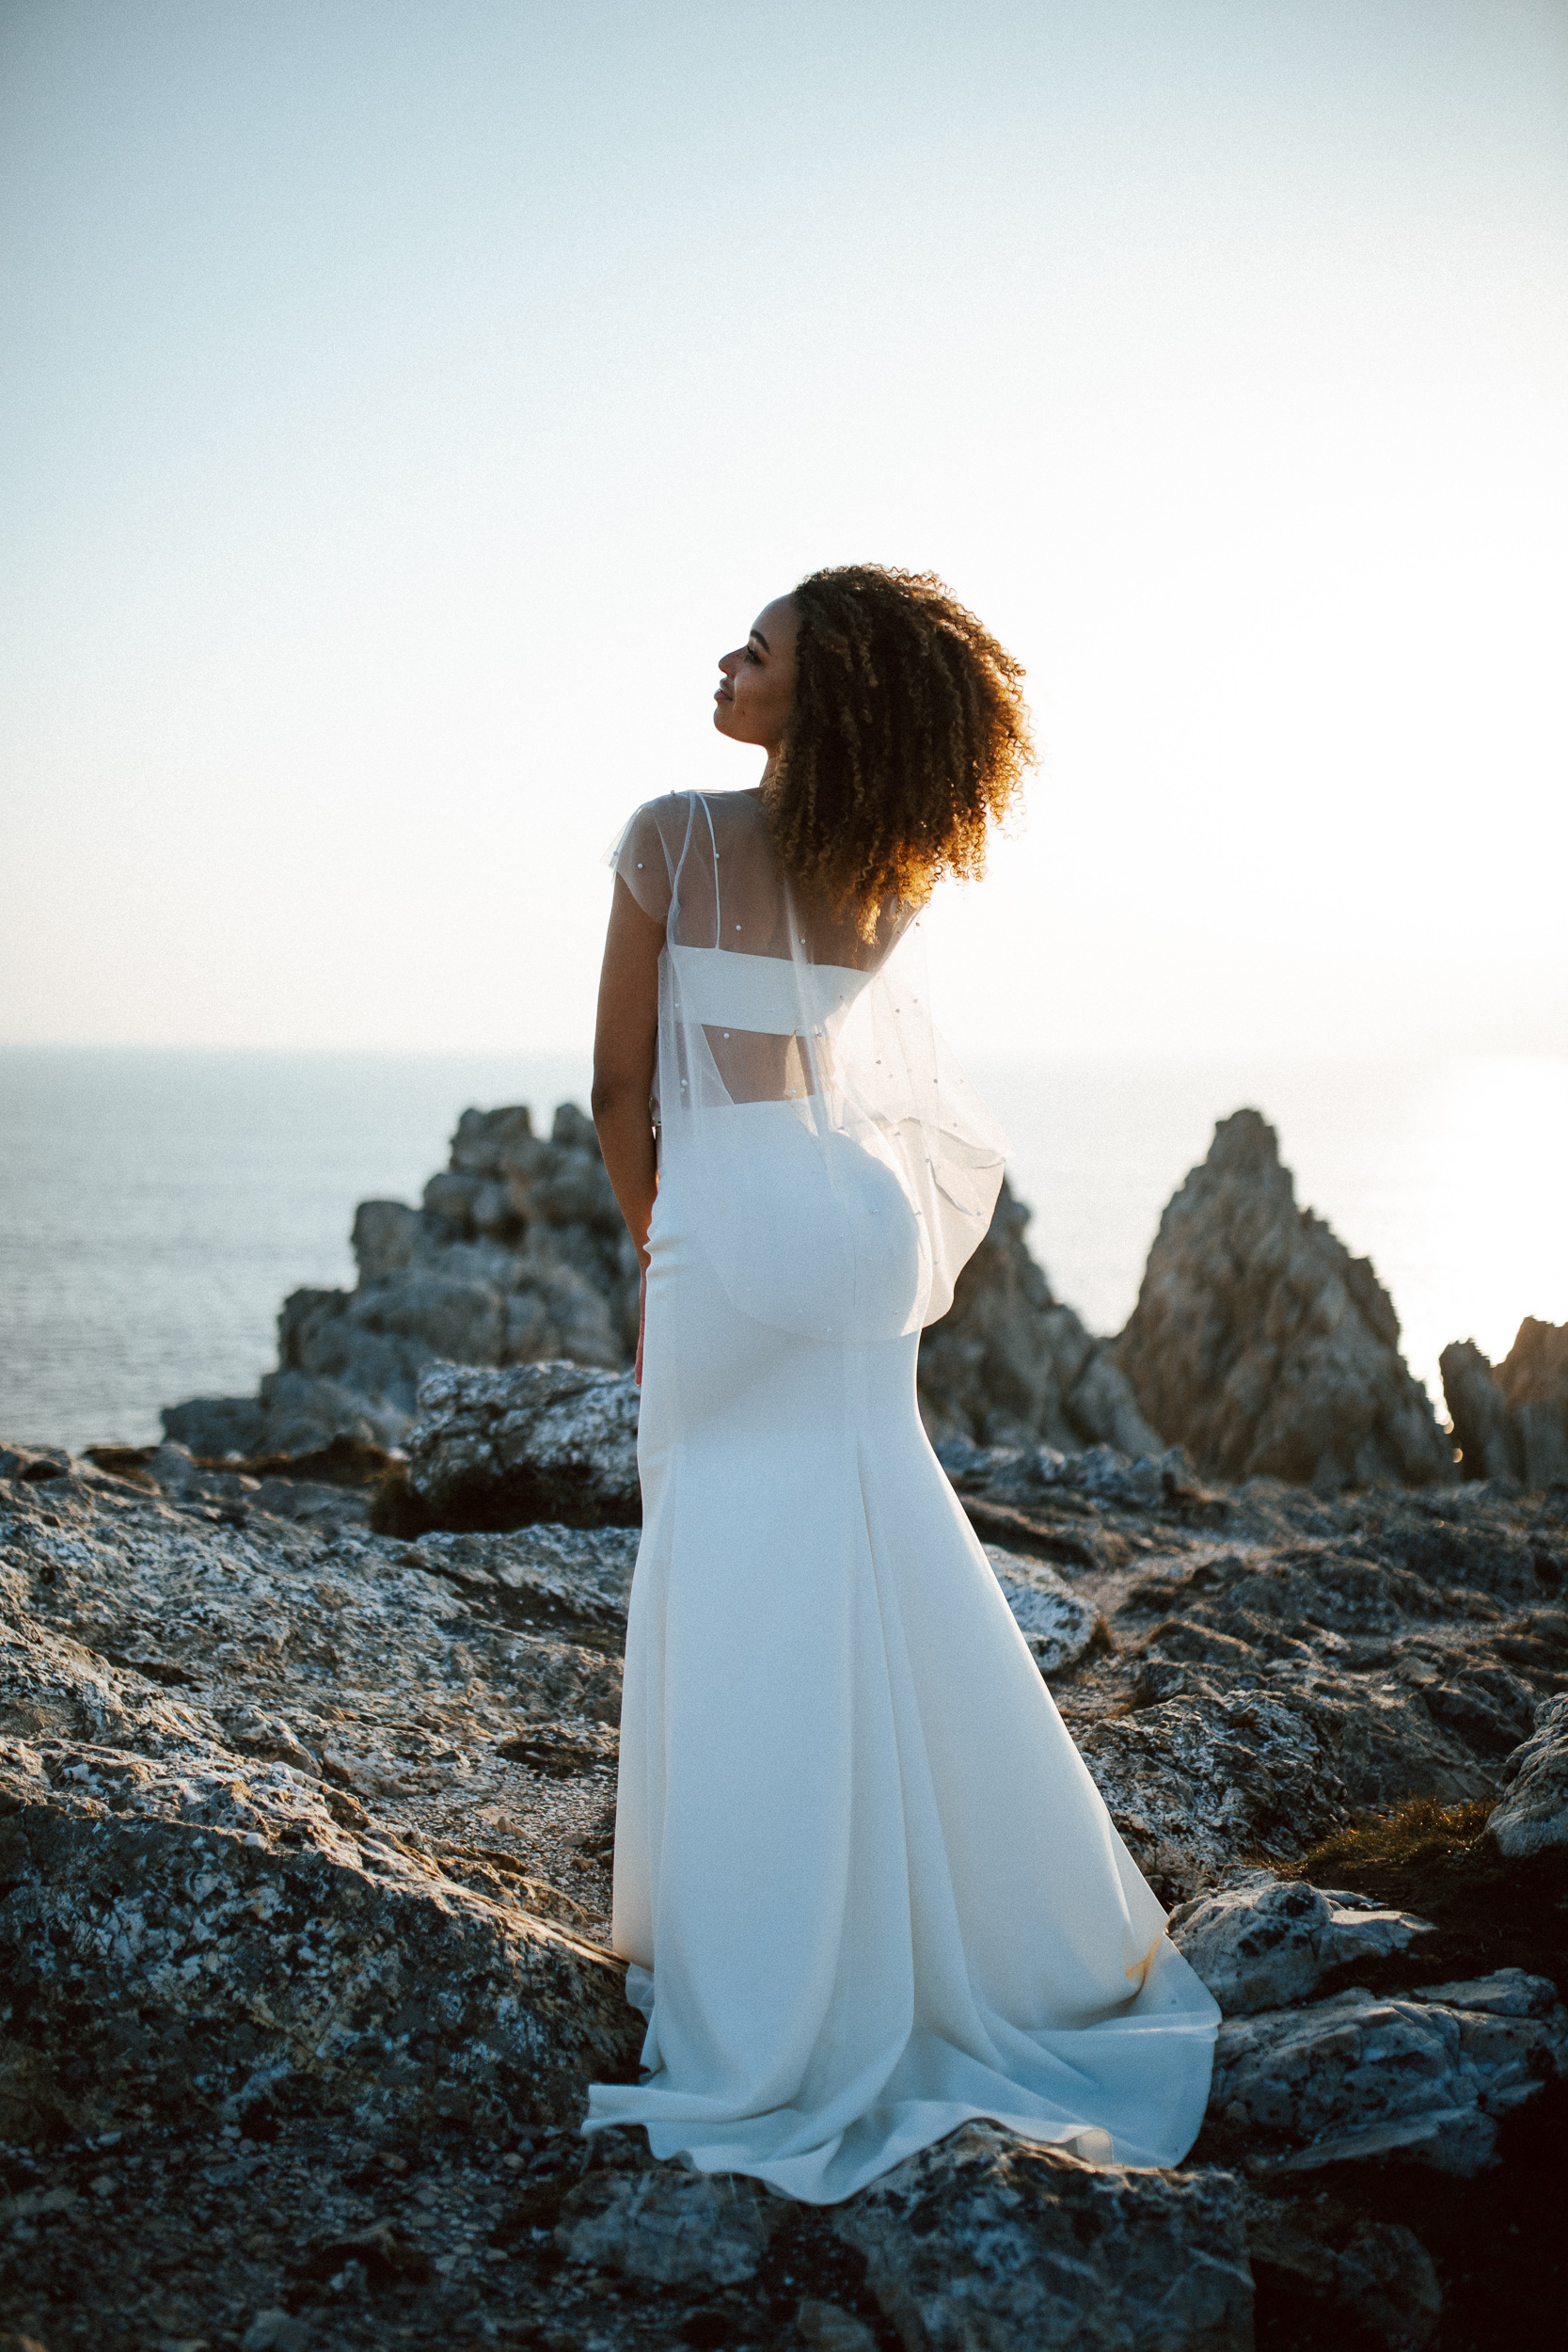 Femme métissée portant une robe de mariée brodée de perles en bord de mer.